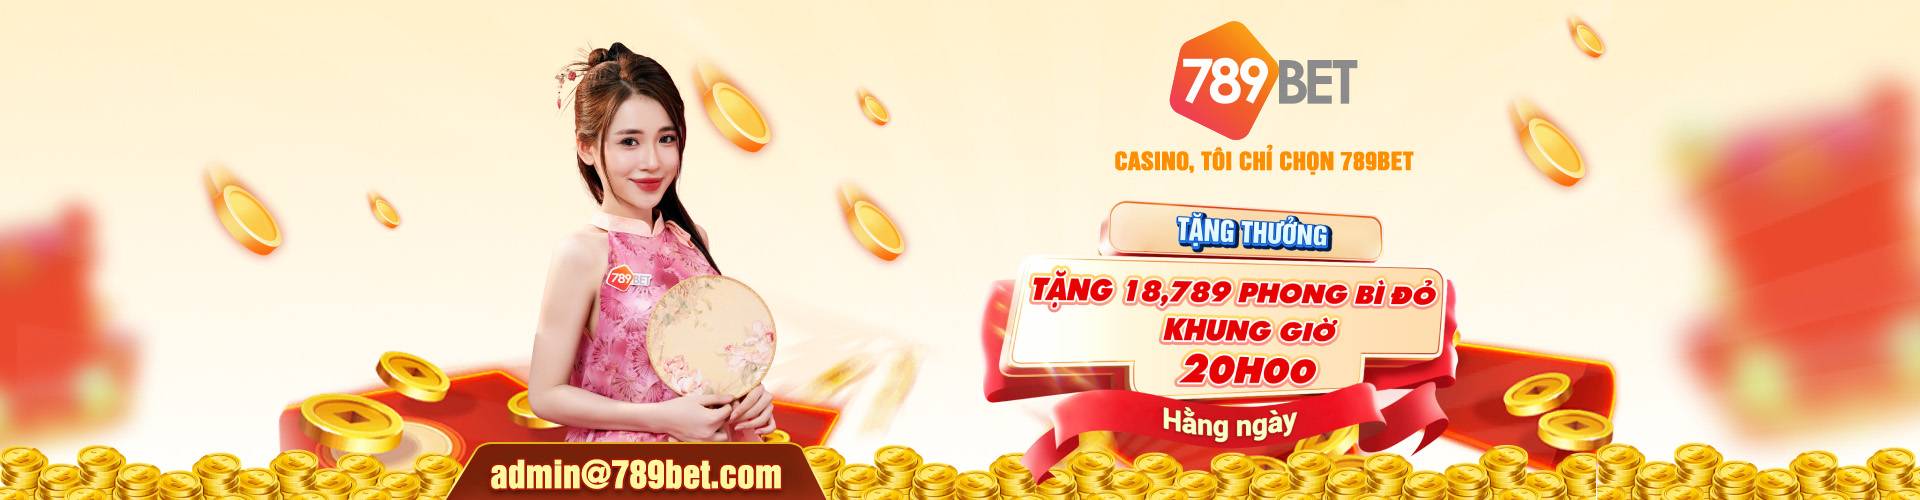 789bet Casino Cover Image